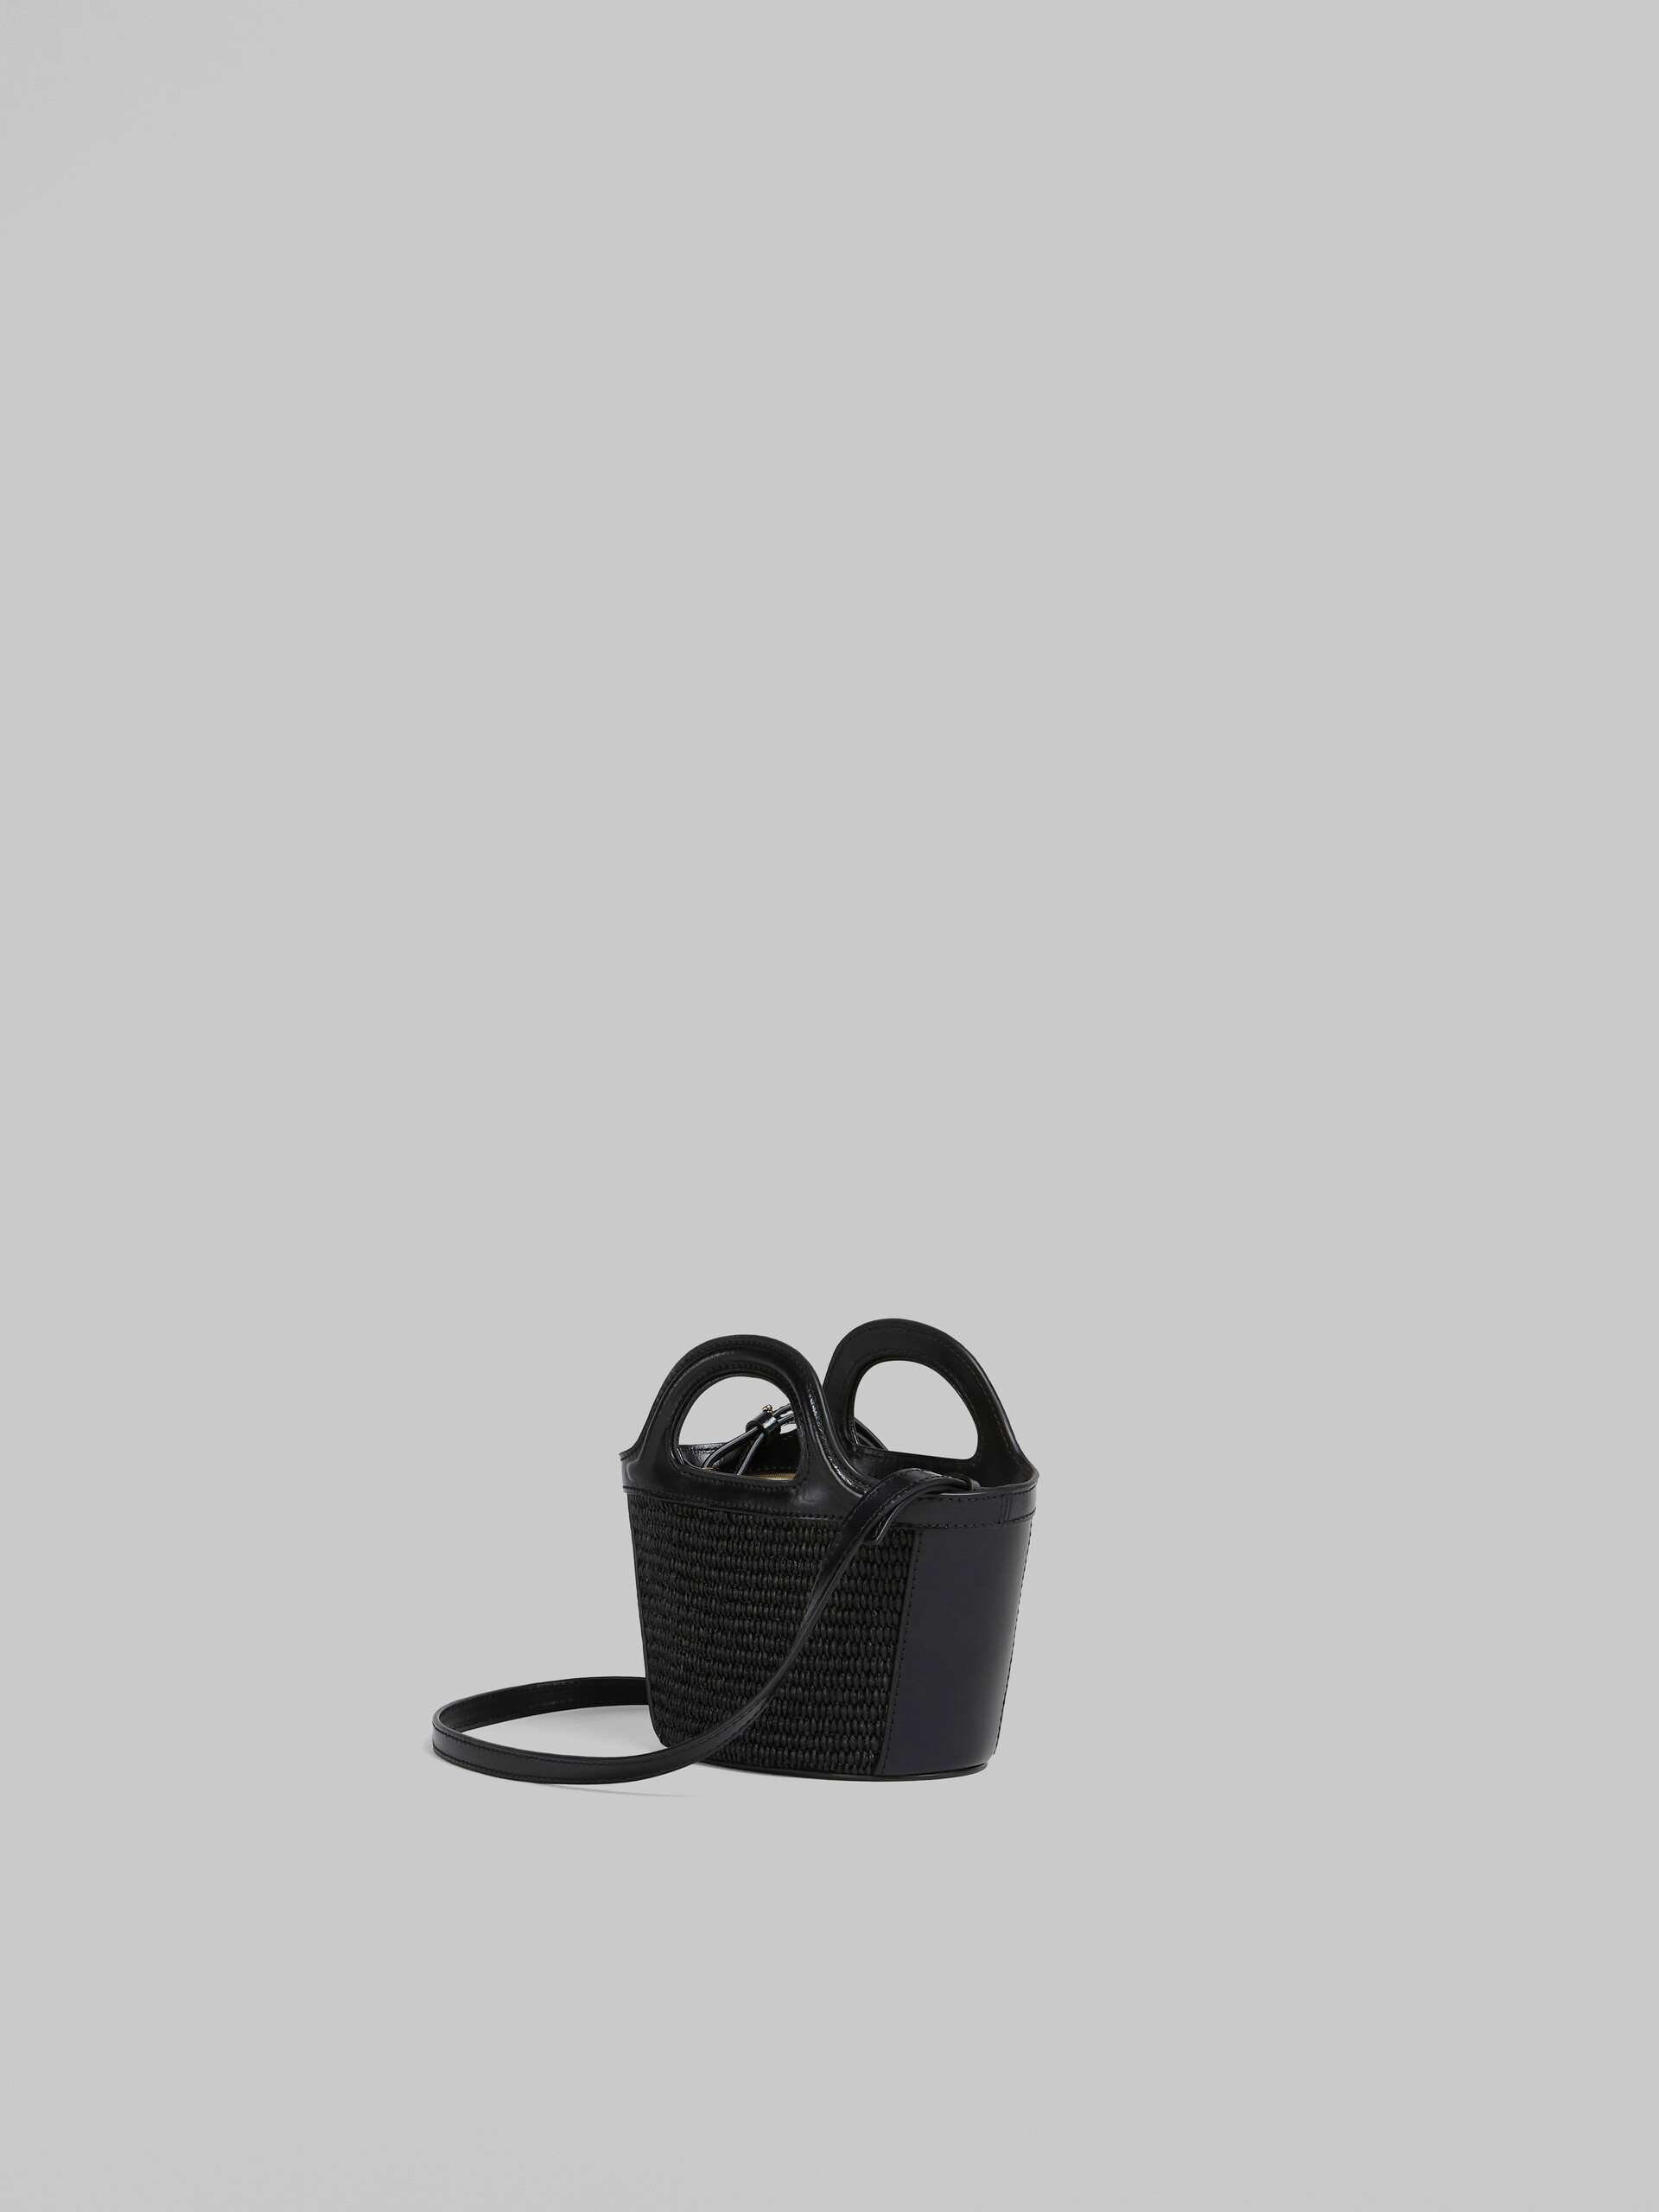 TROPICALIA micro bag in black leather and raffia - Handbags - Image 3